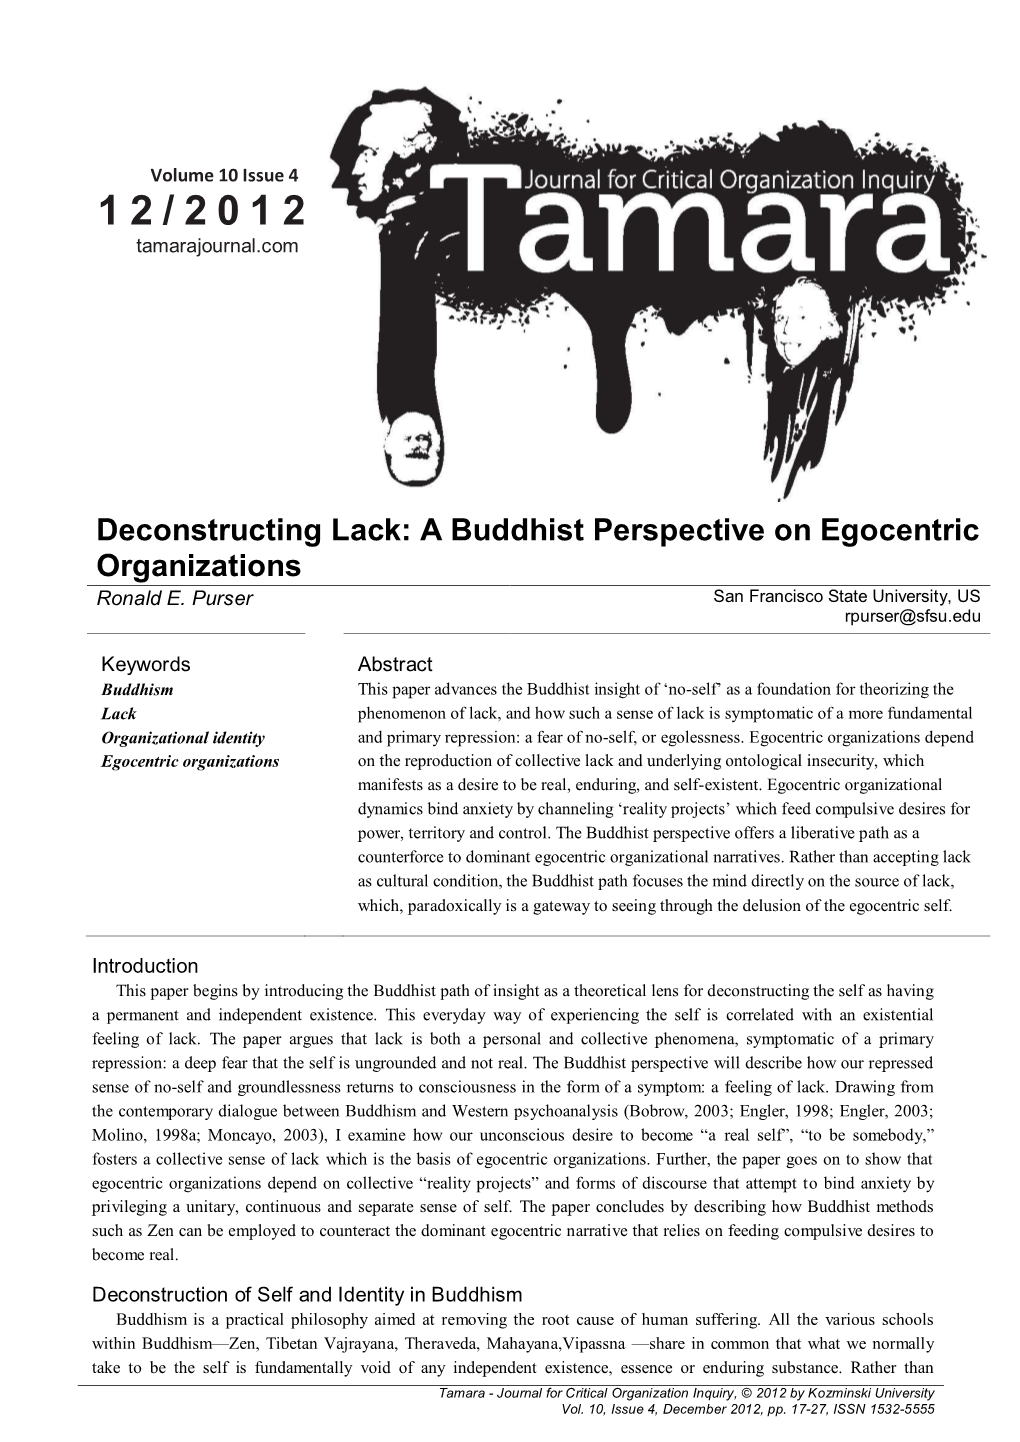 Deconstructing Lack: a Buddhist Perspective on Egocentric Organizations • RONALD E